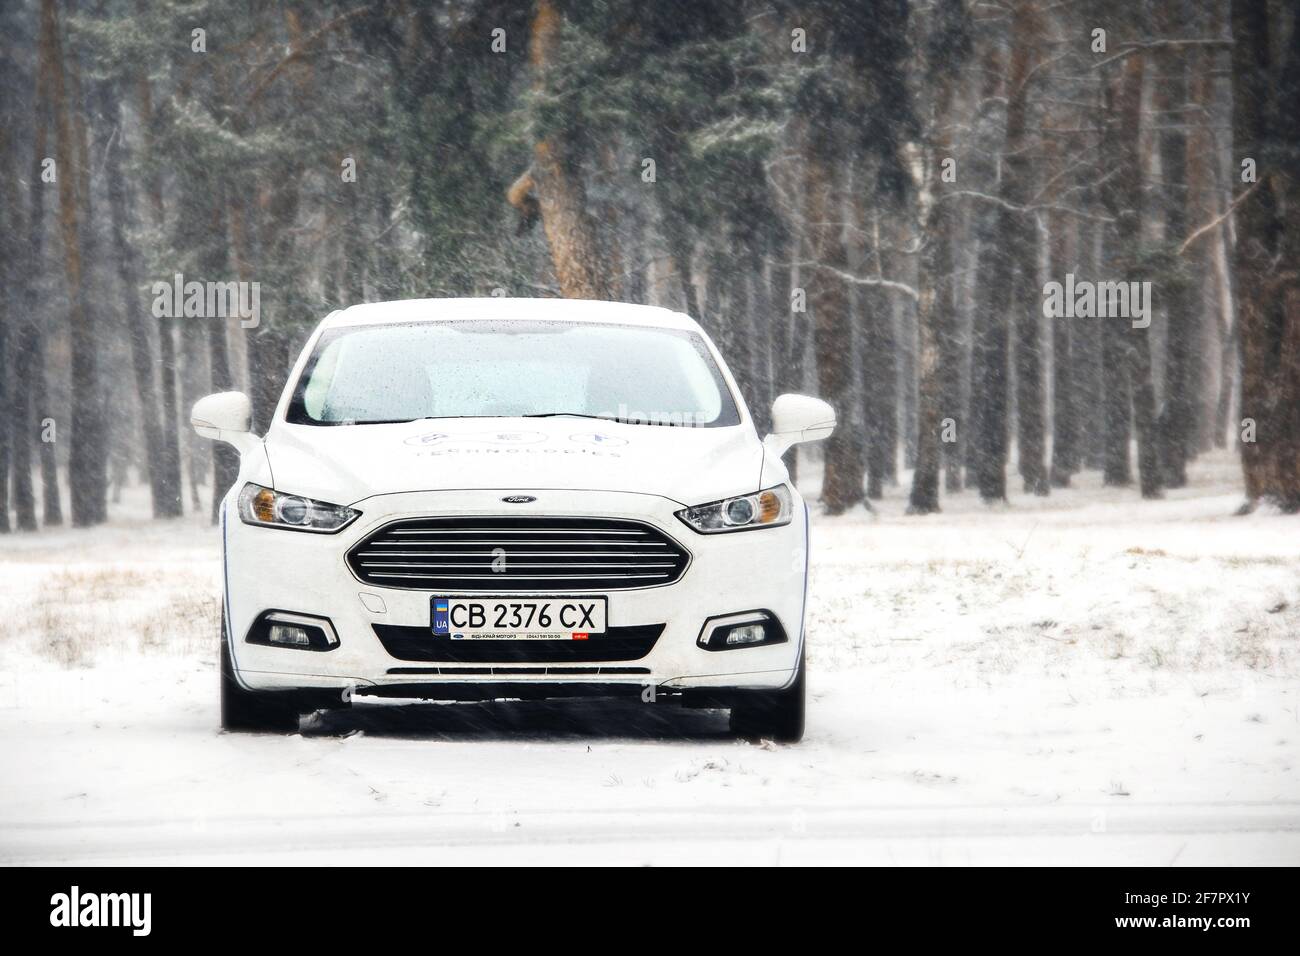 Chernigov, Ukraine - January 28, 2021: White Ford car in a snowy forest. Beautiful winter Stock Photo